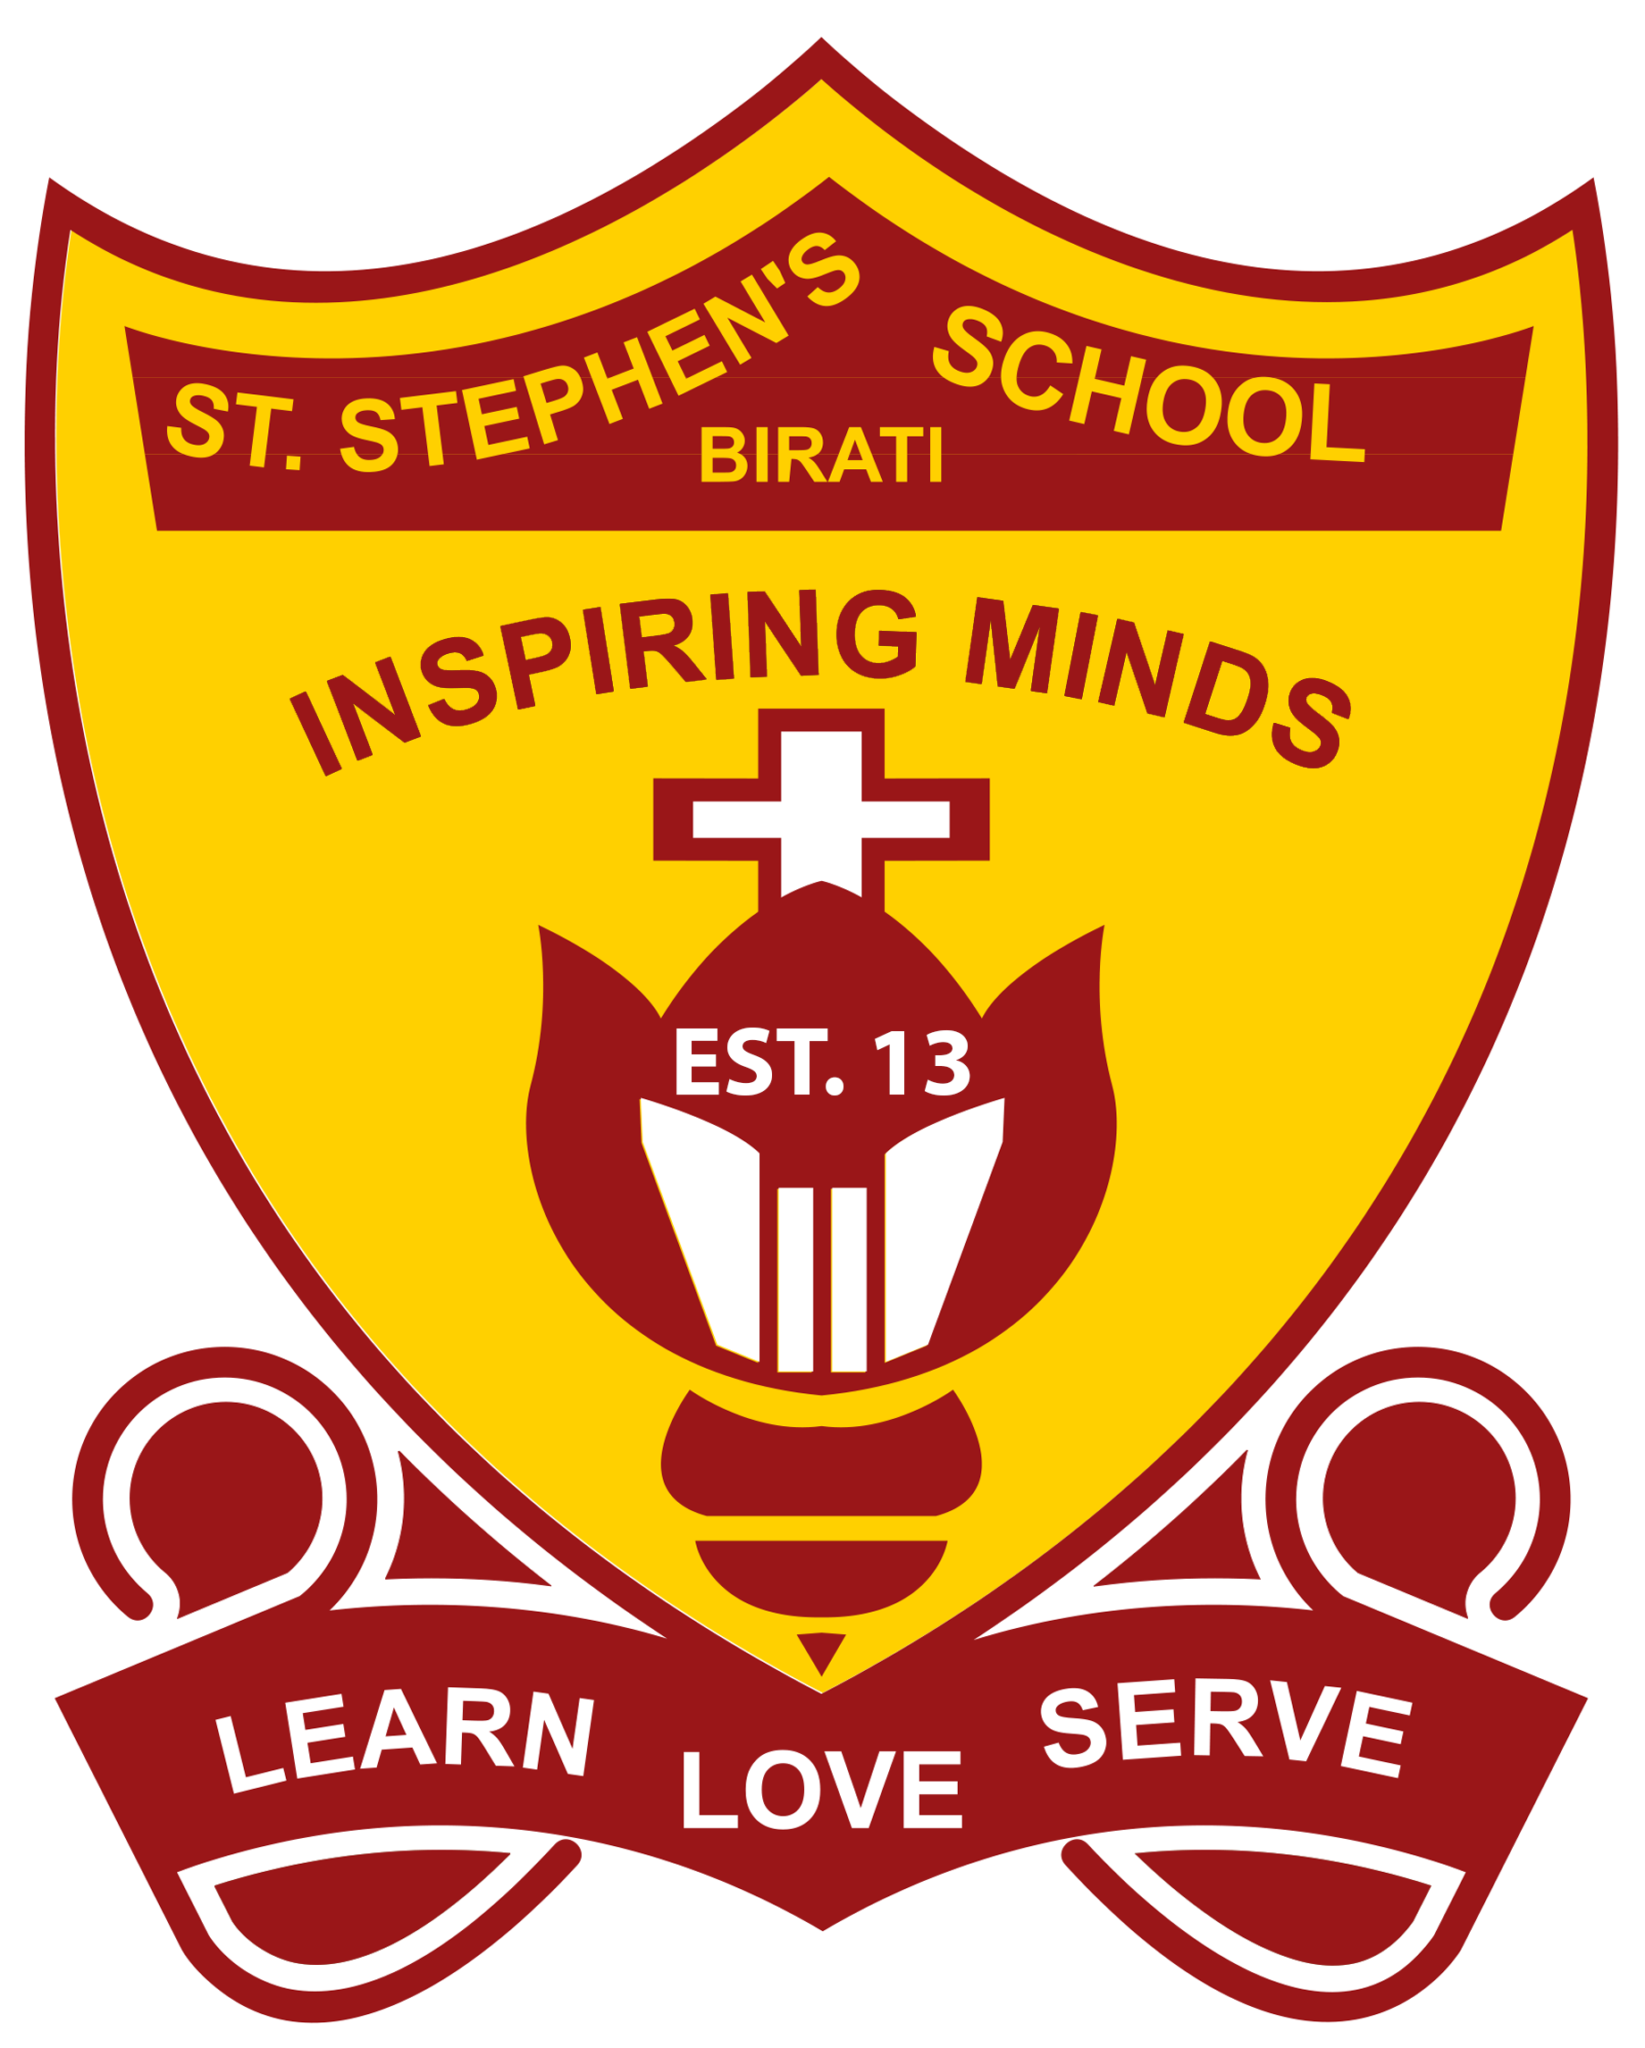 St. Stephens School, Birati Contact Us